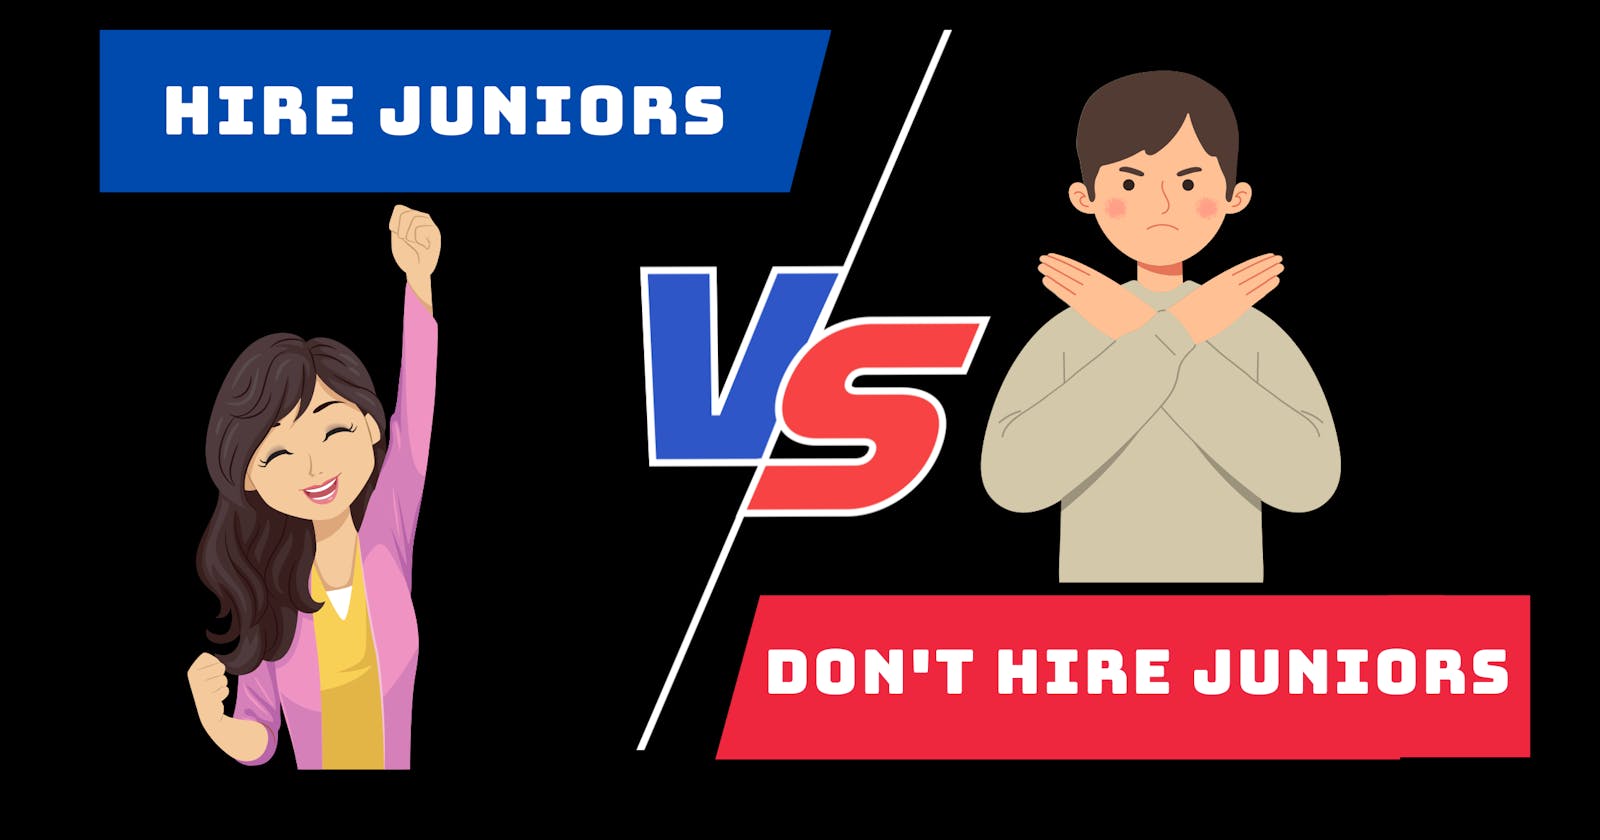 Should we hire junior developer advocates?